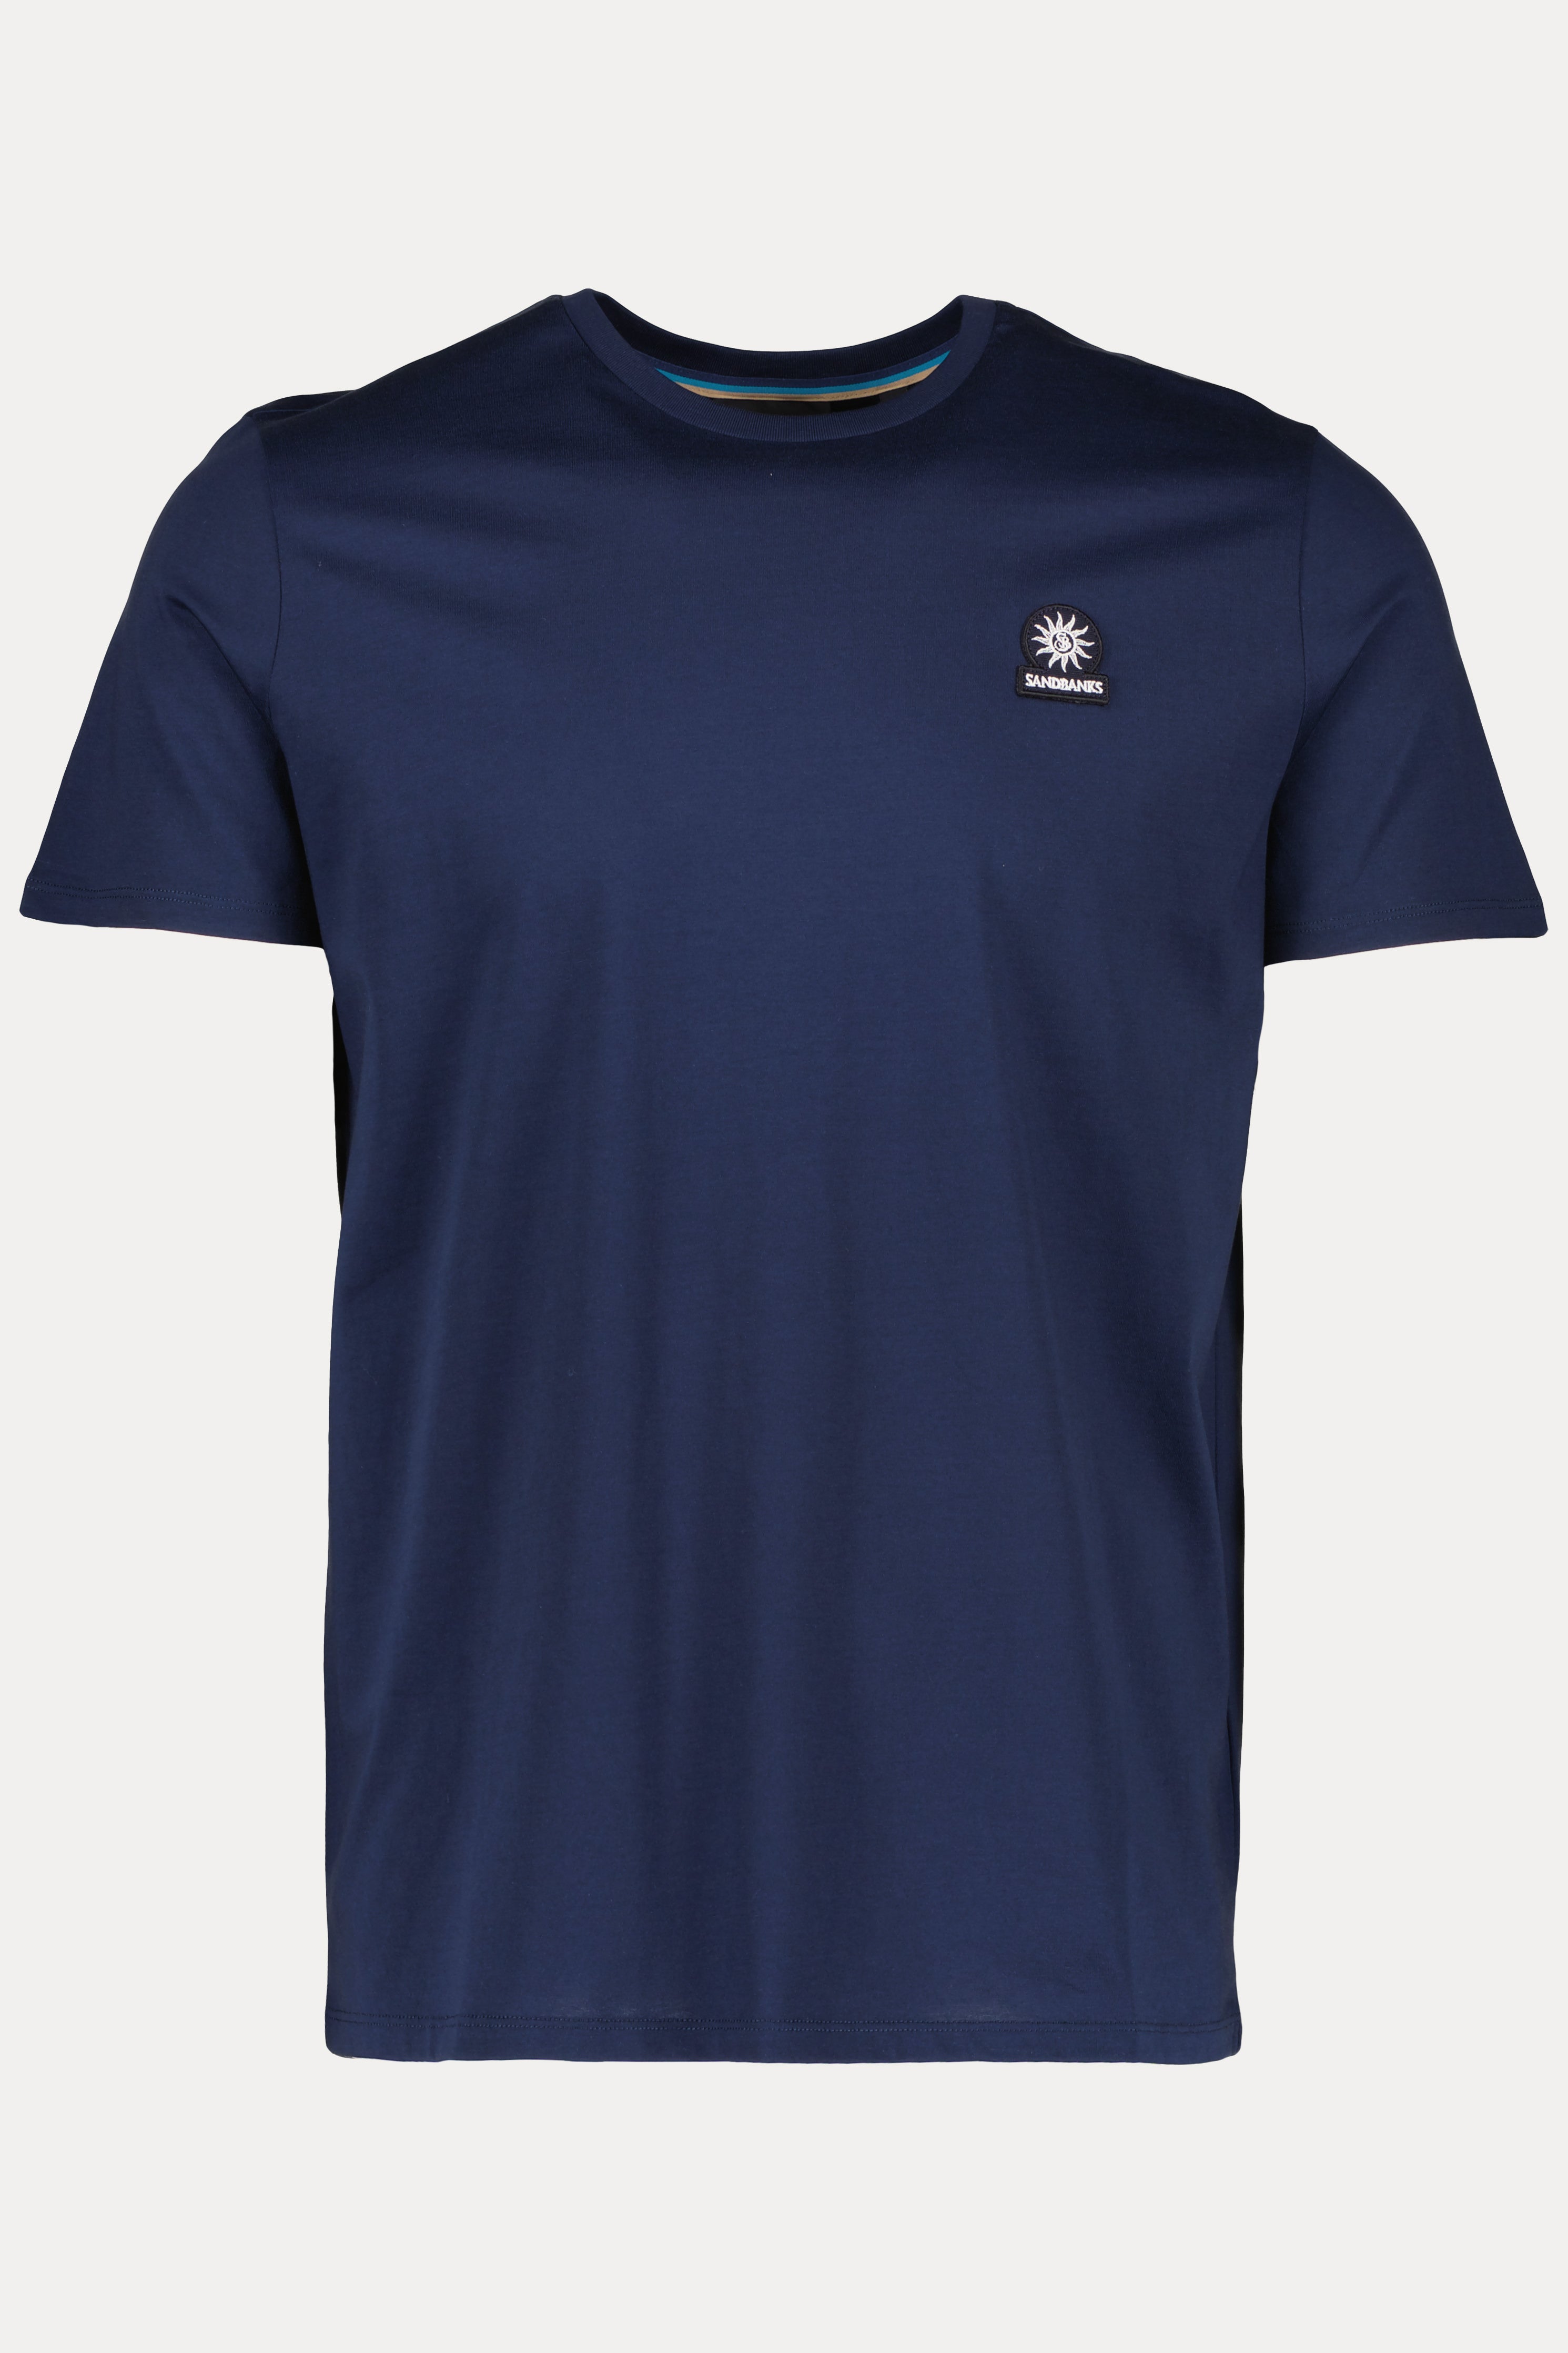 Men's Sandbanks Badge Logo Navy T Shirt